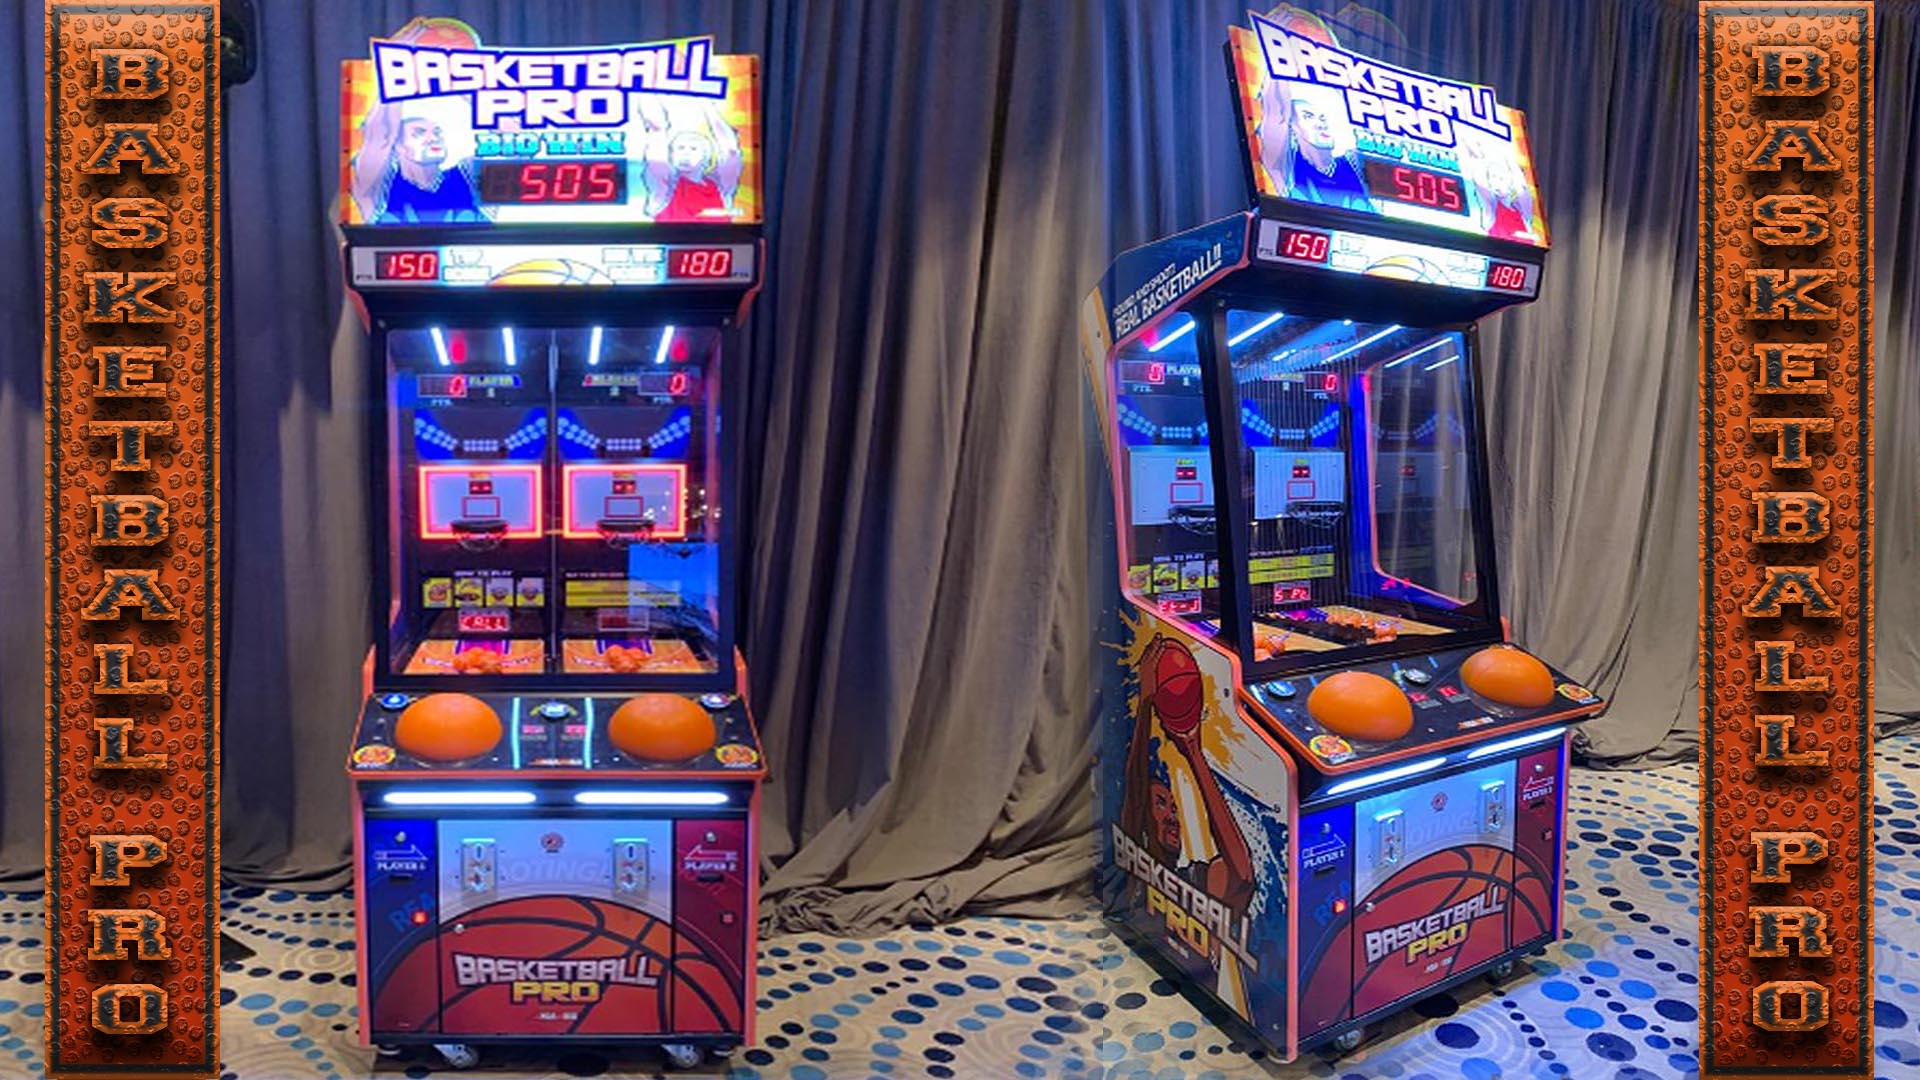 basketball arcade game rental in orlando